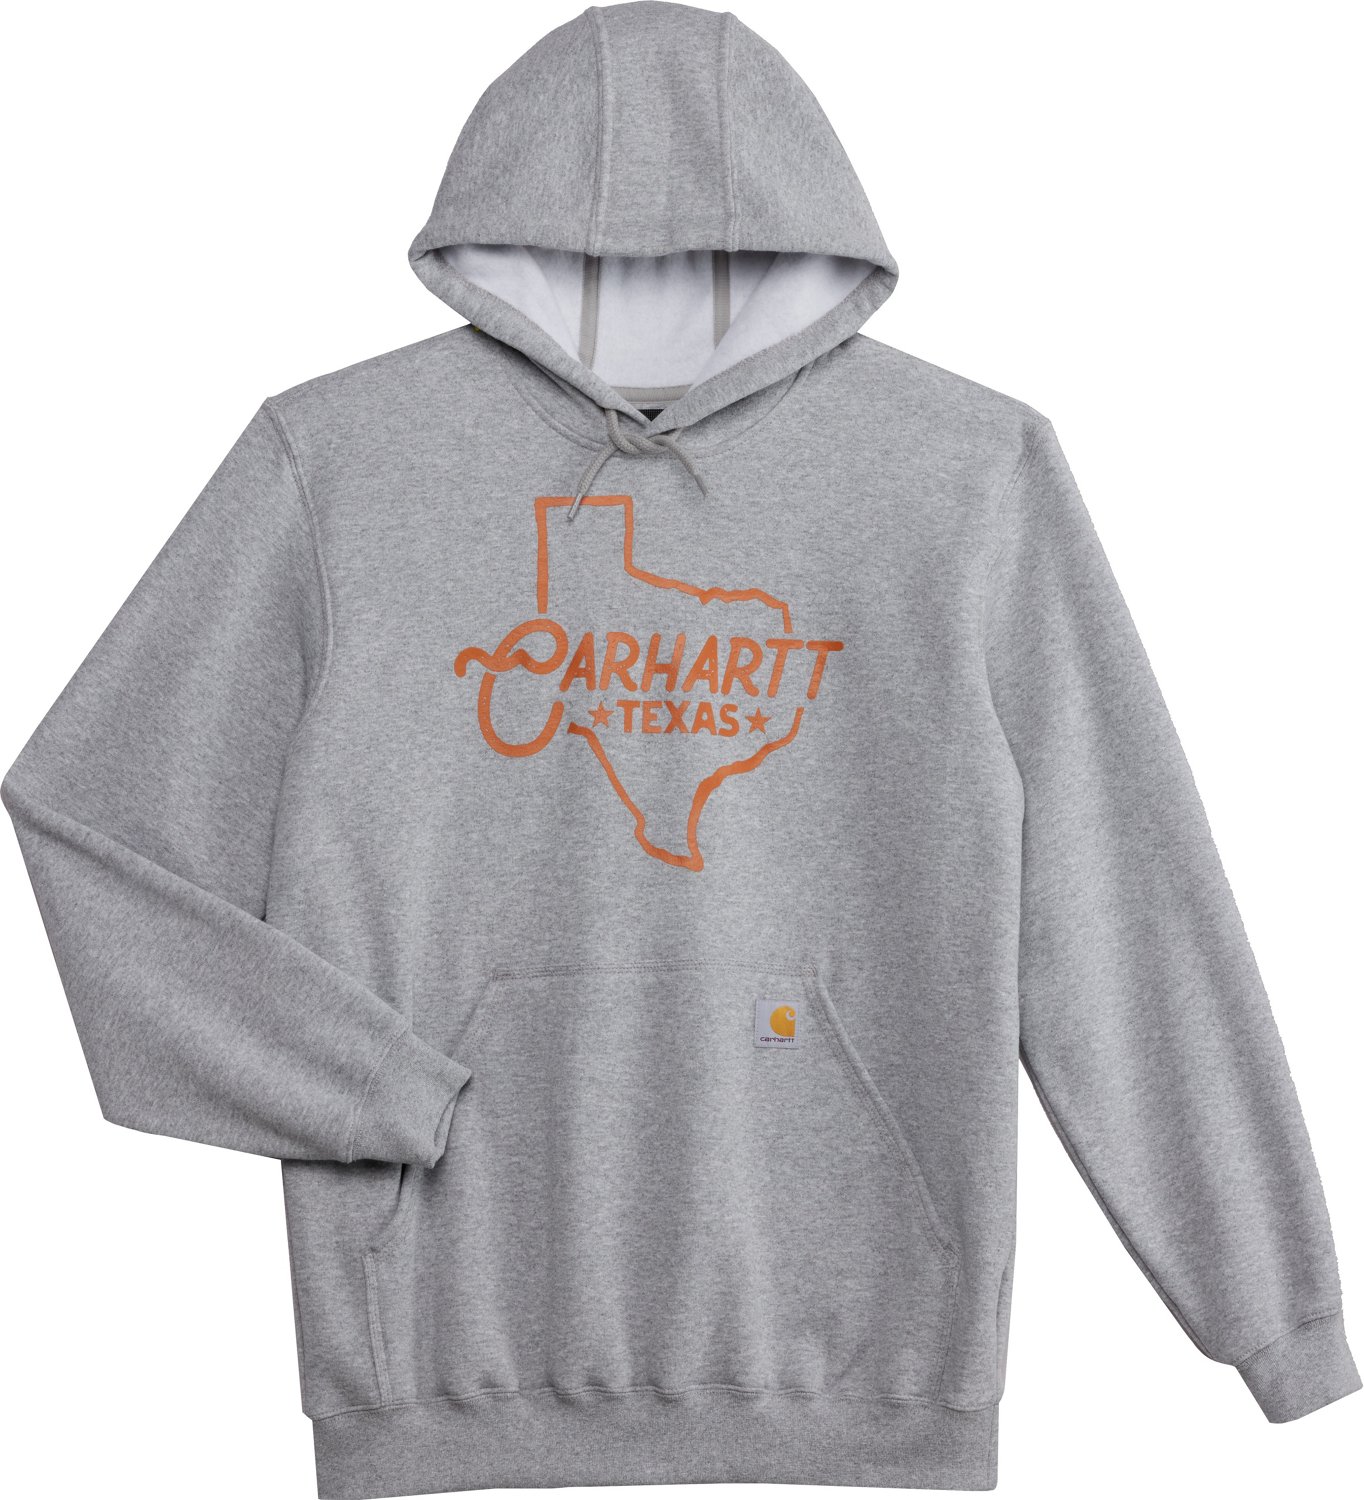 Carhartt Men's Texas Midweight Graphic Sweatshirt